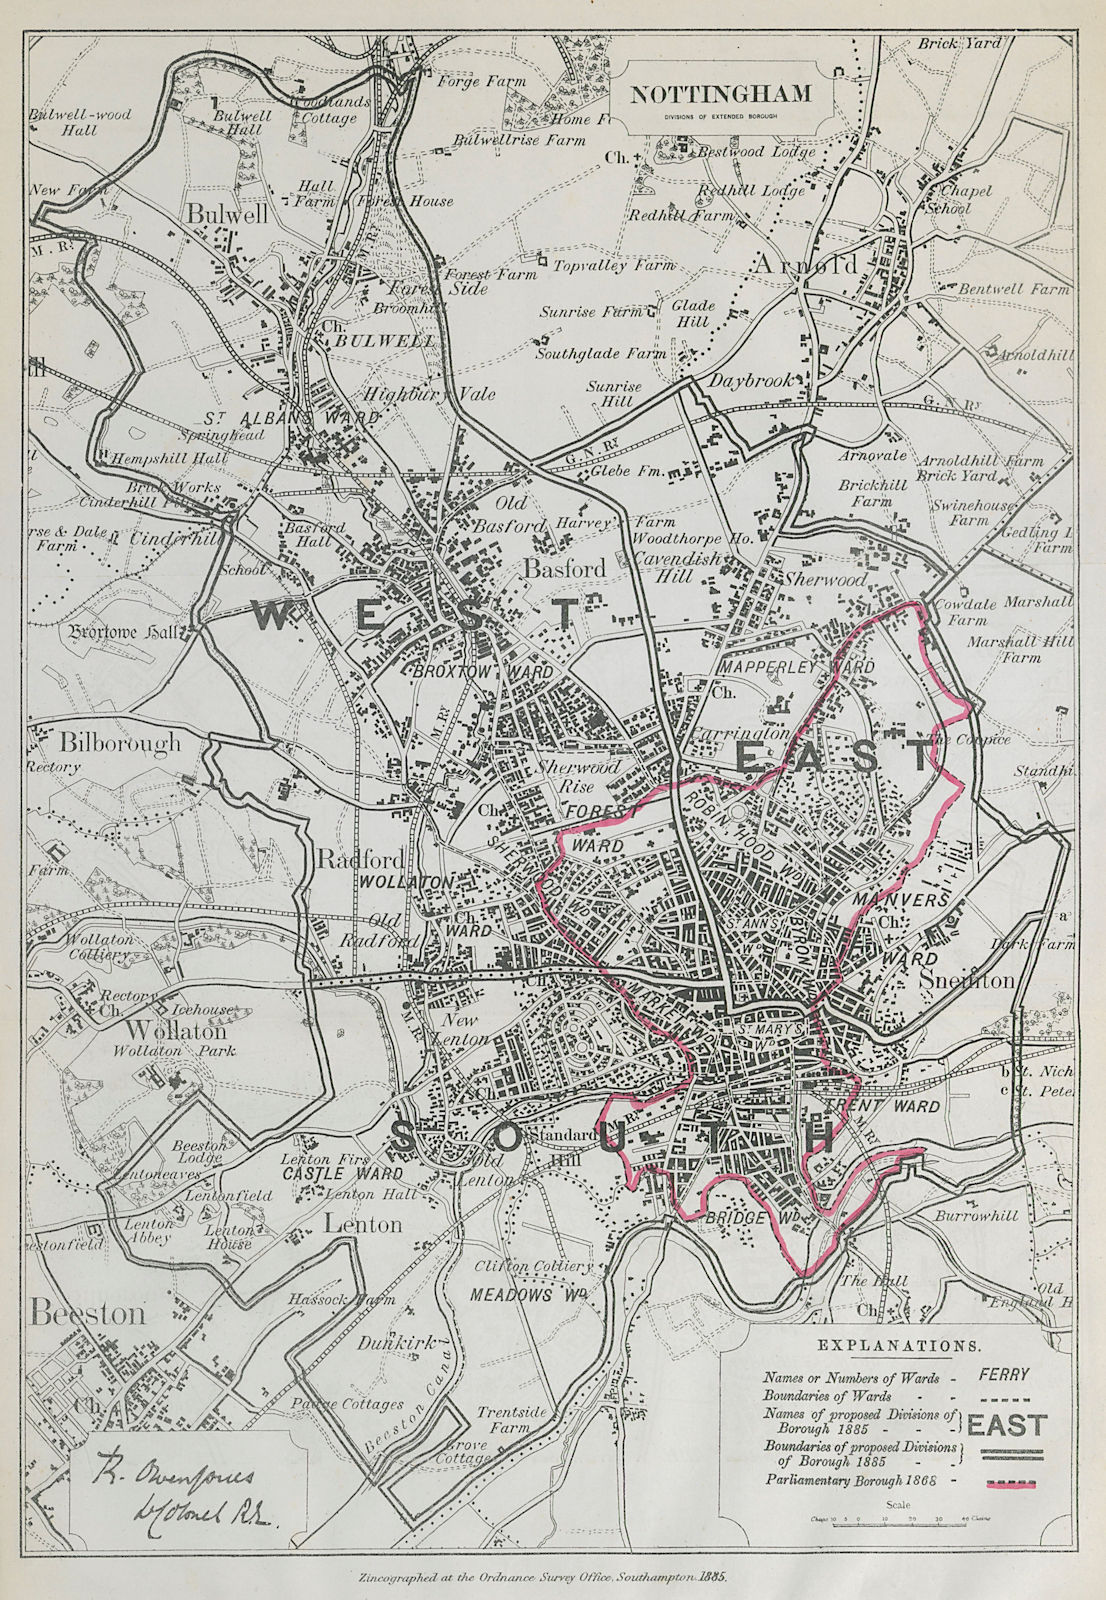 Nottingham Parliamentary Borough. Broxtow Bulwell. BOUNDARY COMMISSION 1885 map